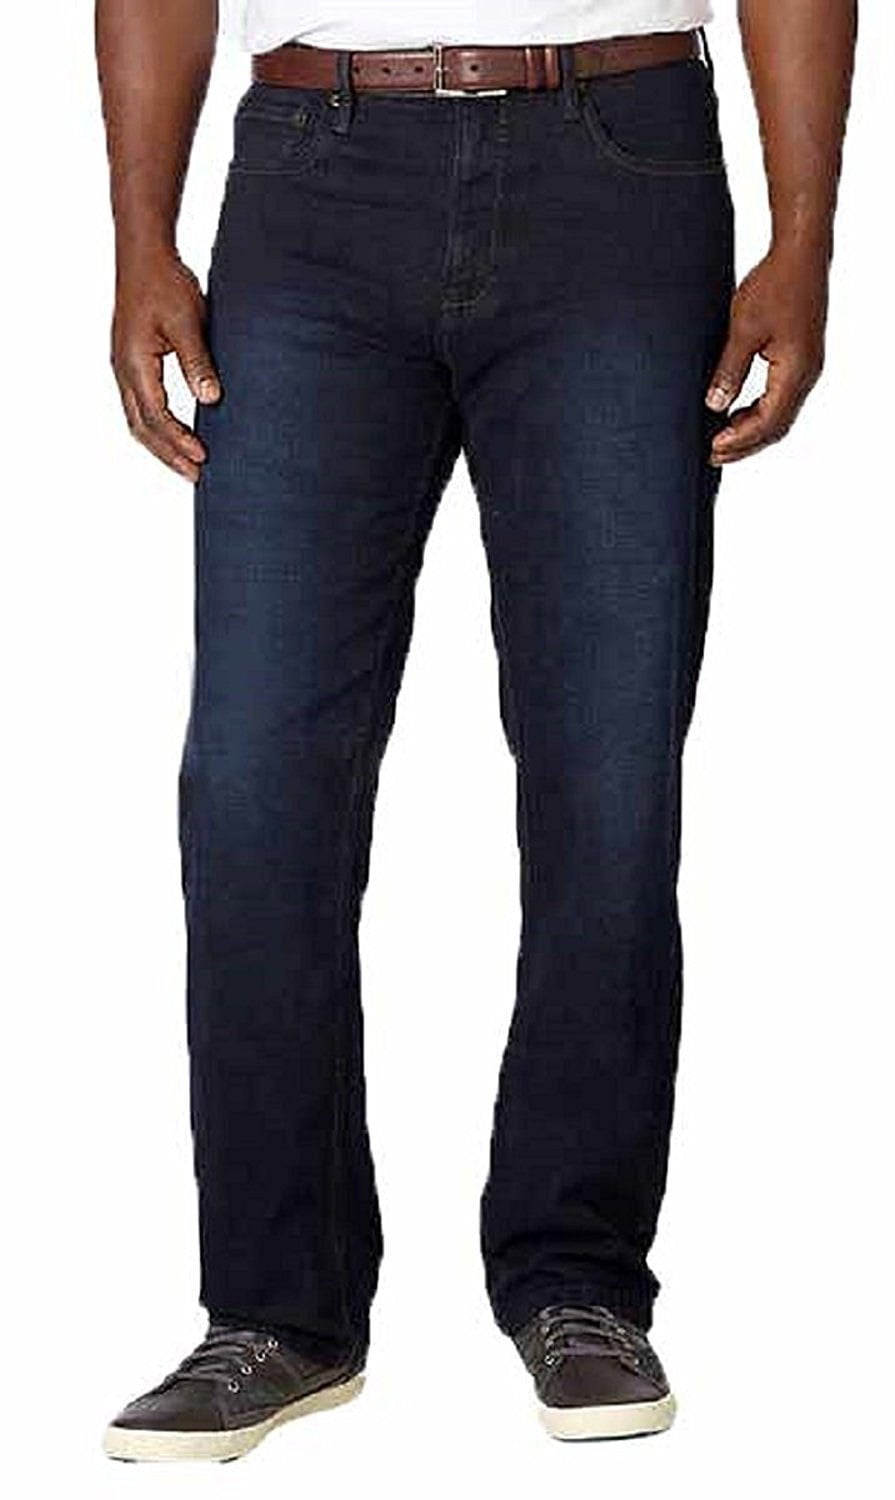 size 42 stretch jeans